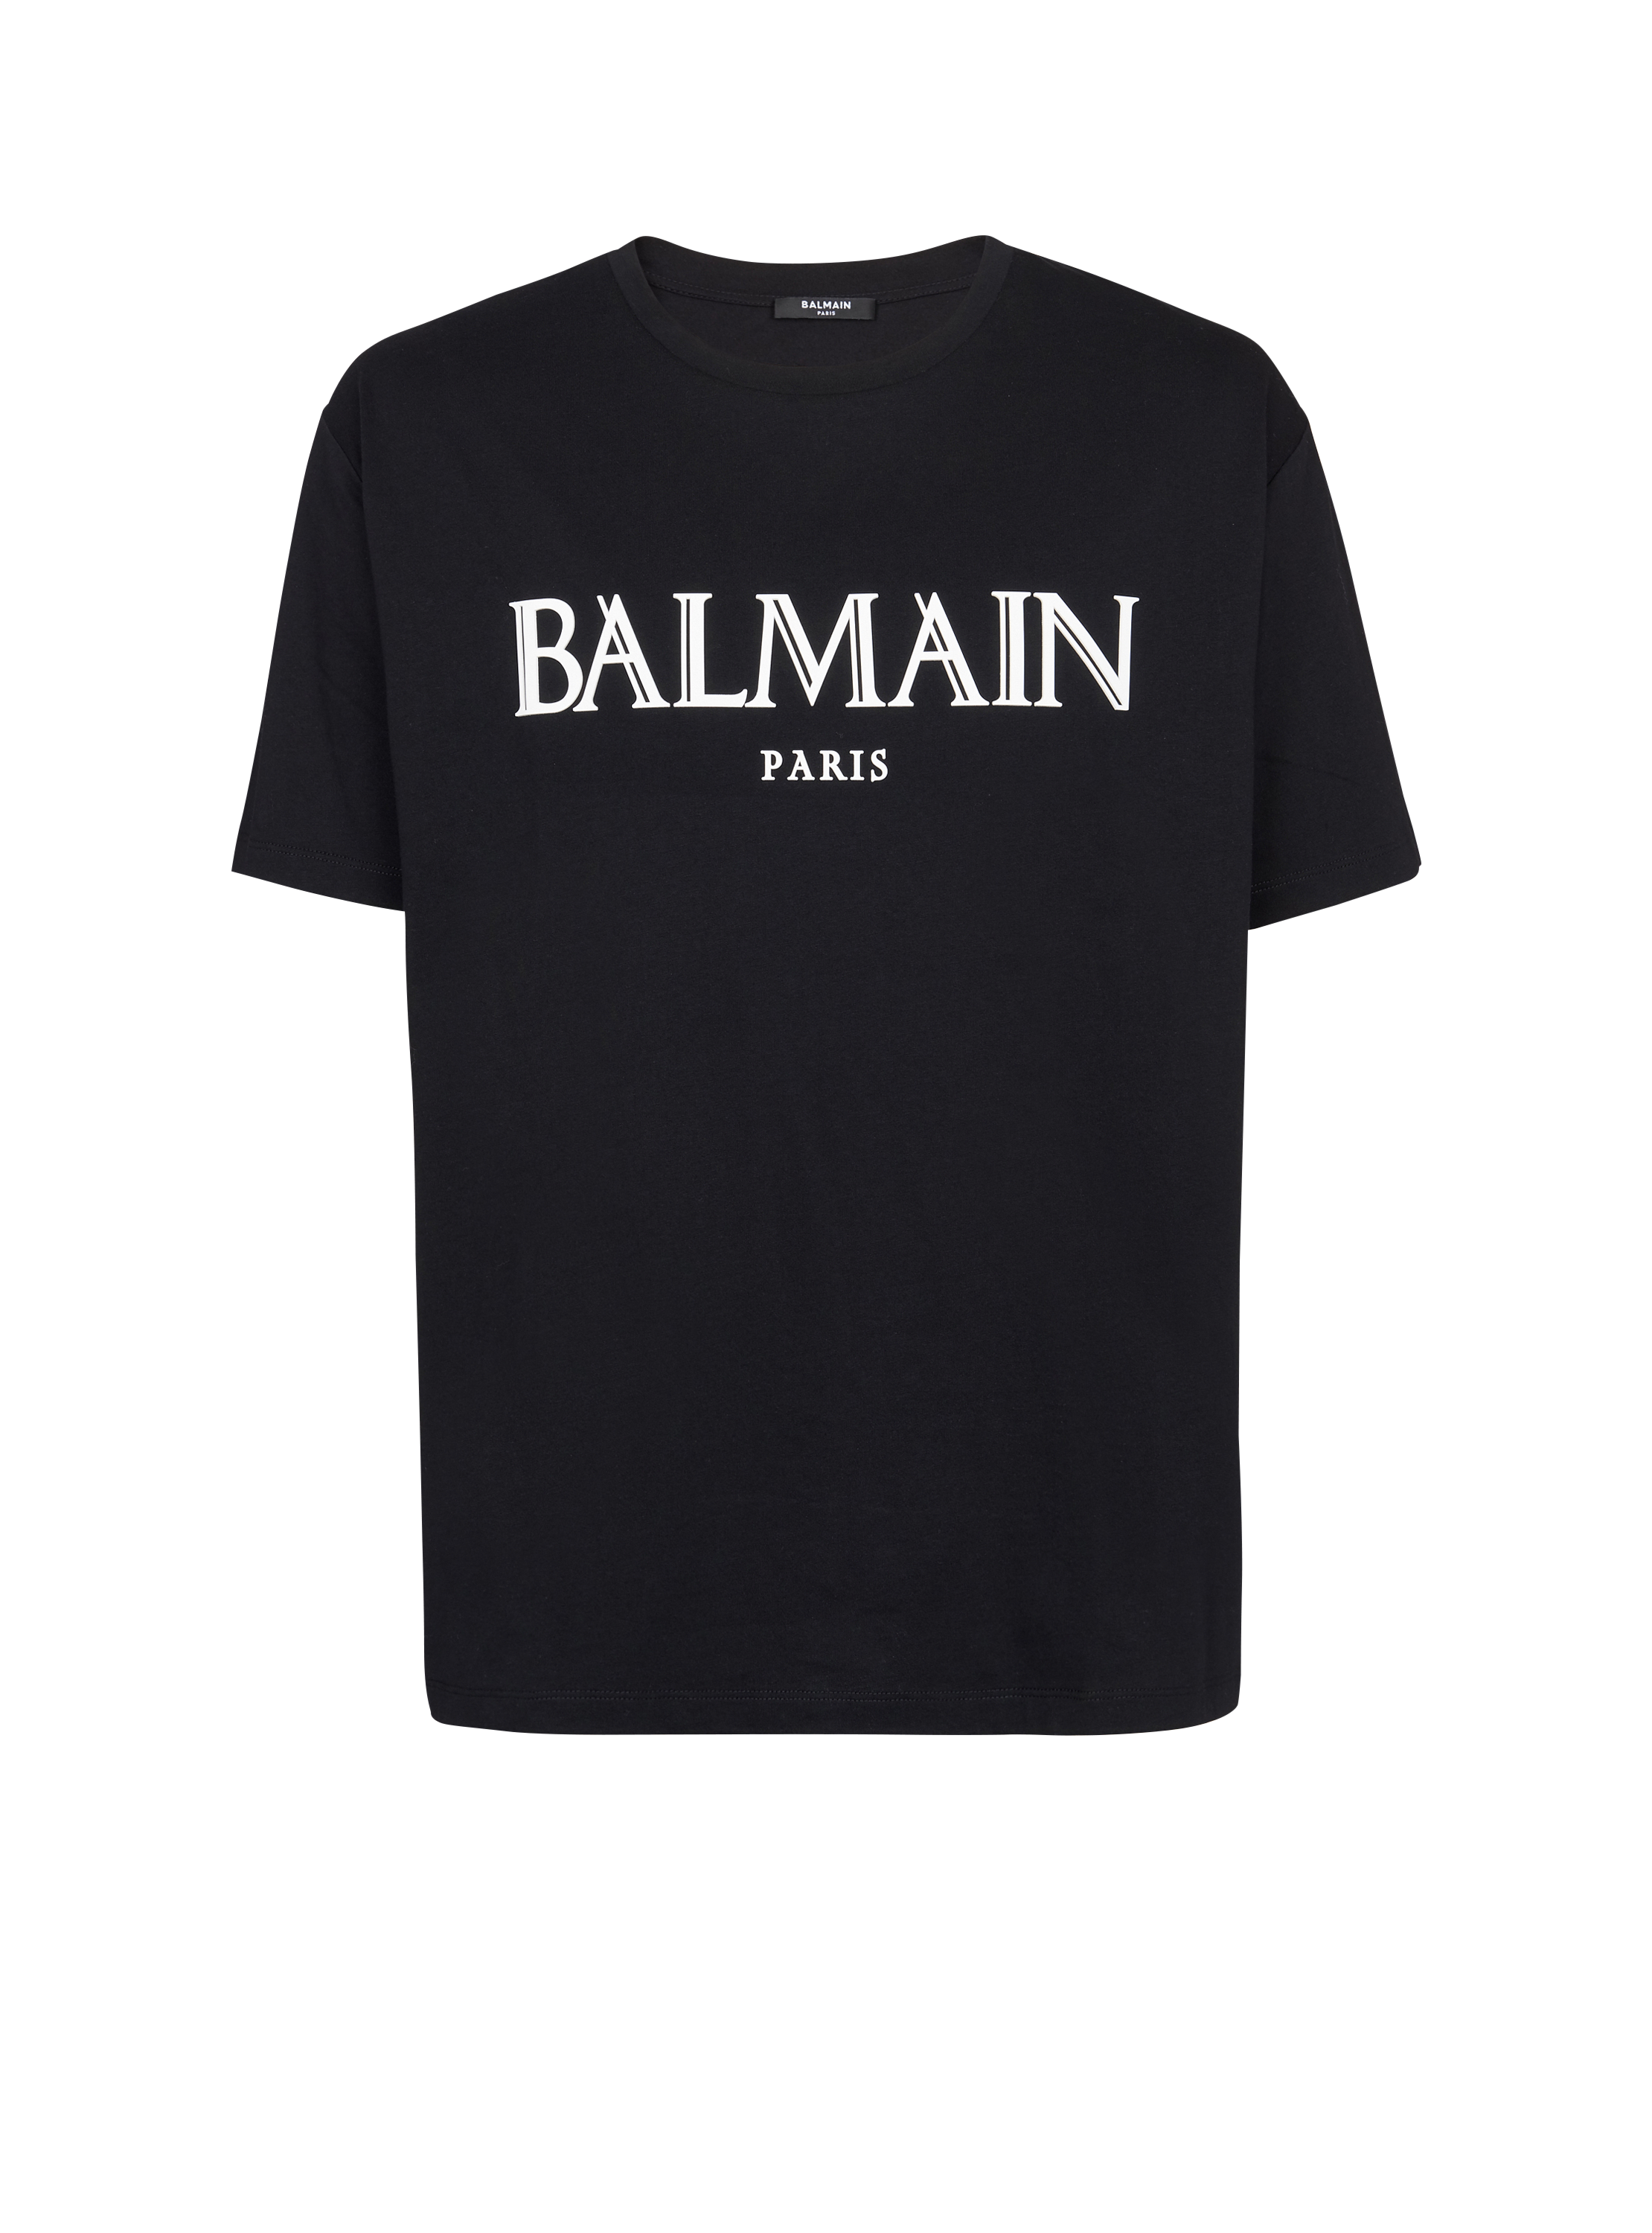 Oversized T-shirt with rubber Roman Balmain logo